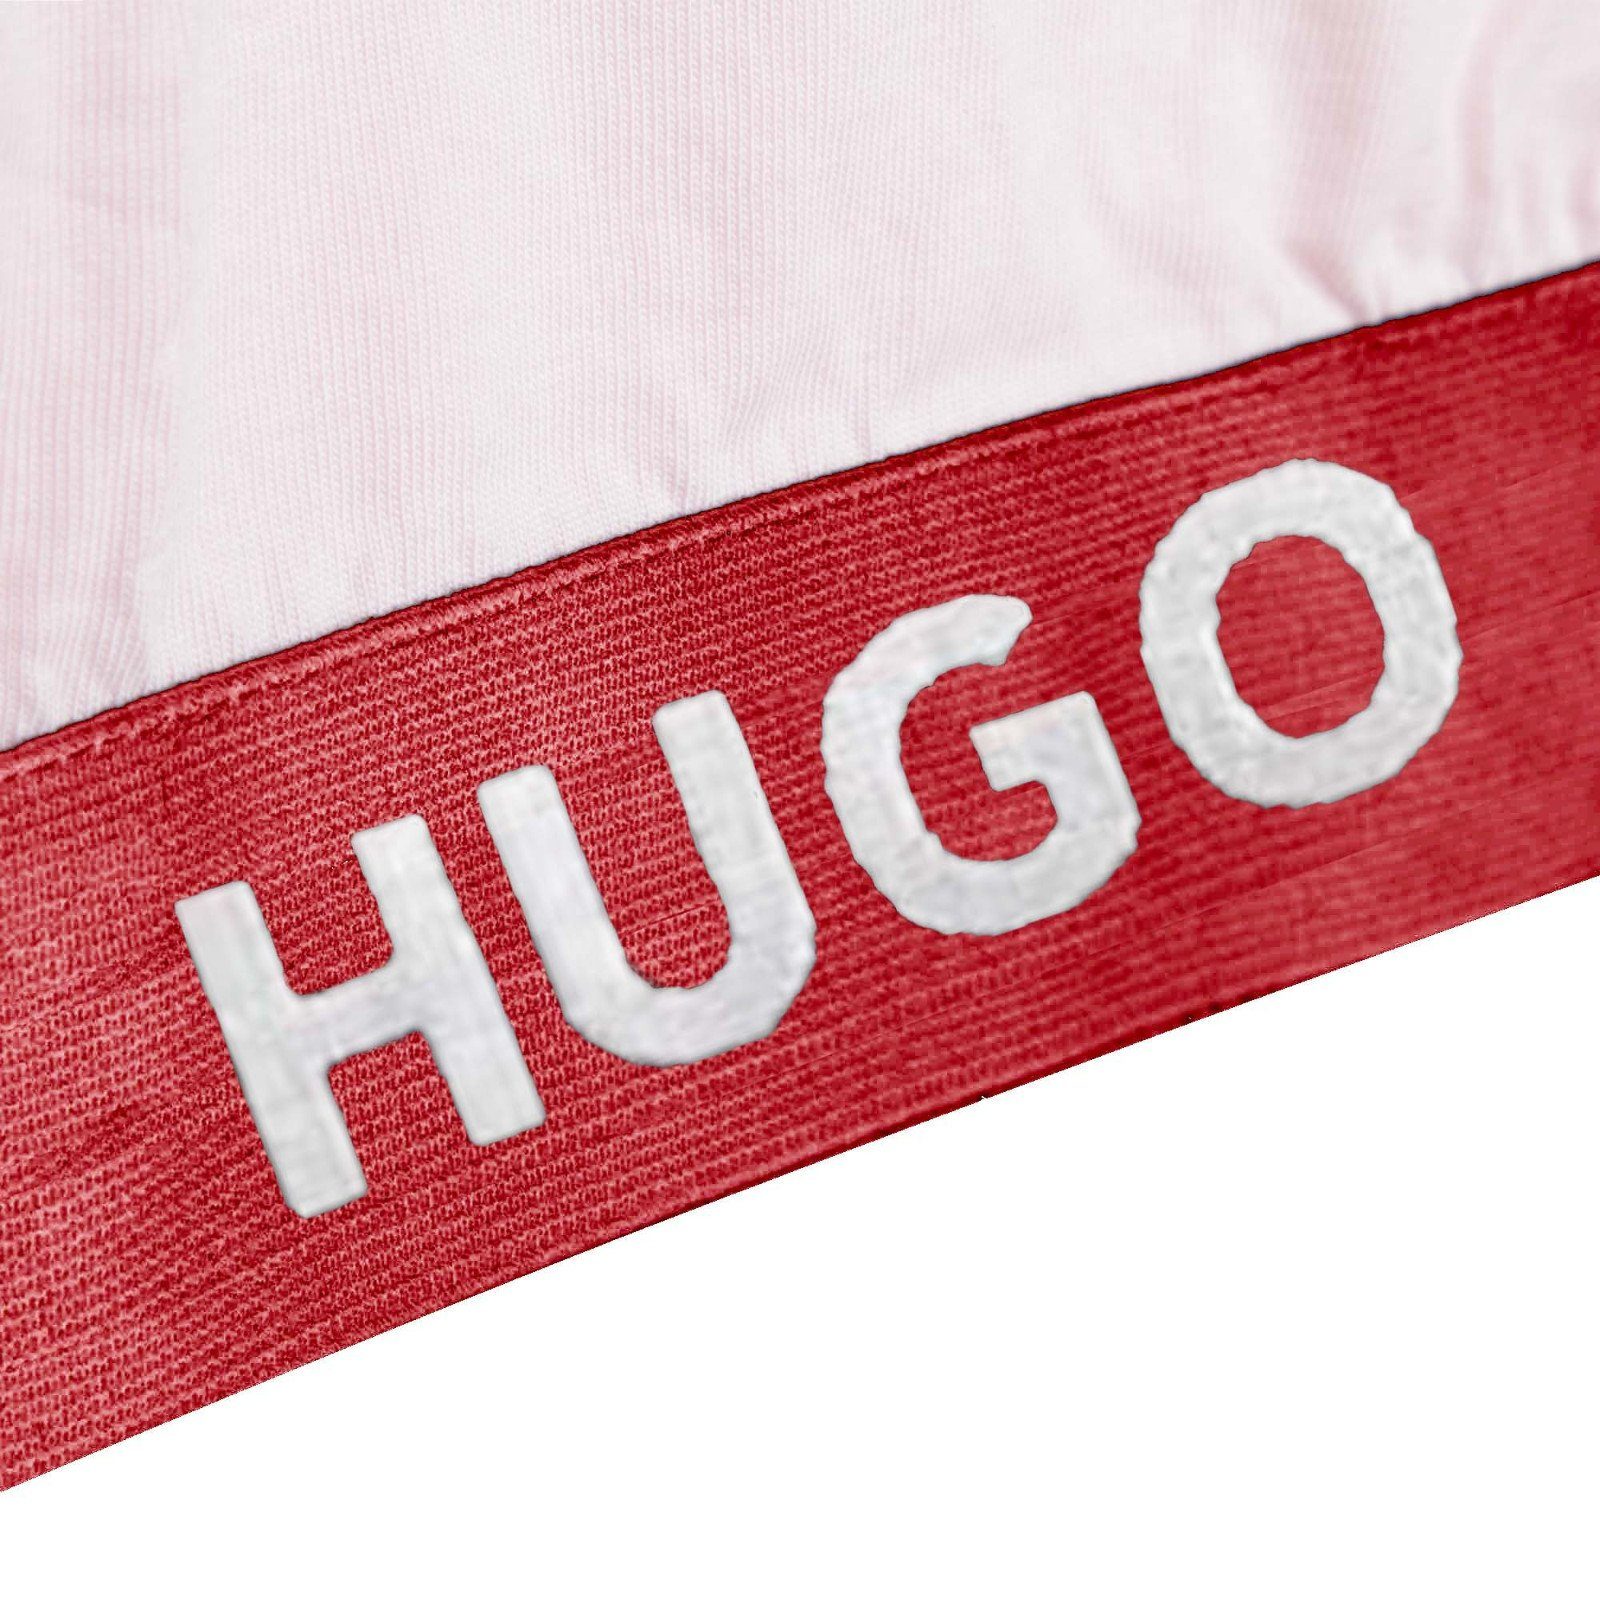 Logo HUGO Print-Shirt T-Shirt HUGO hellrosa Print Kids mit Mädchen